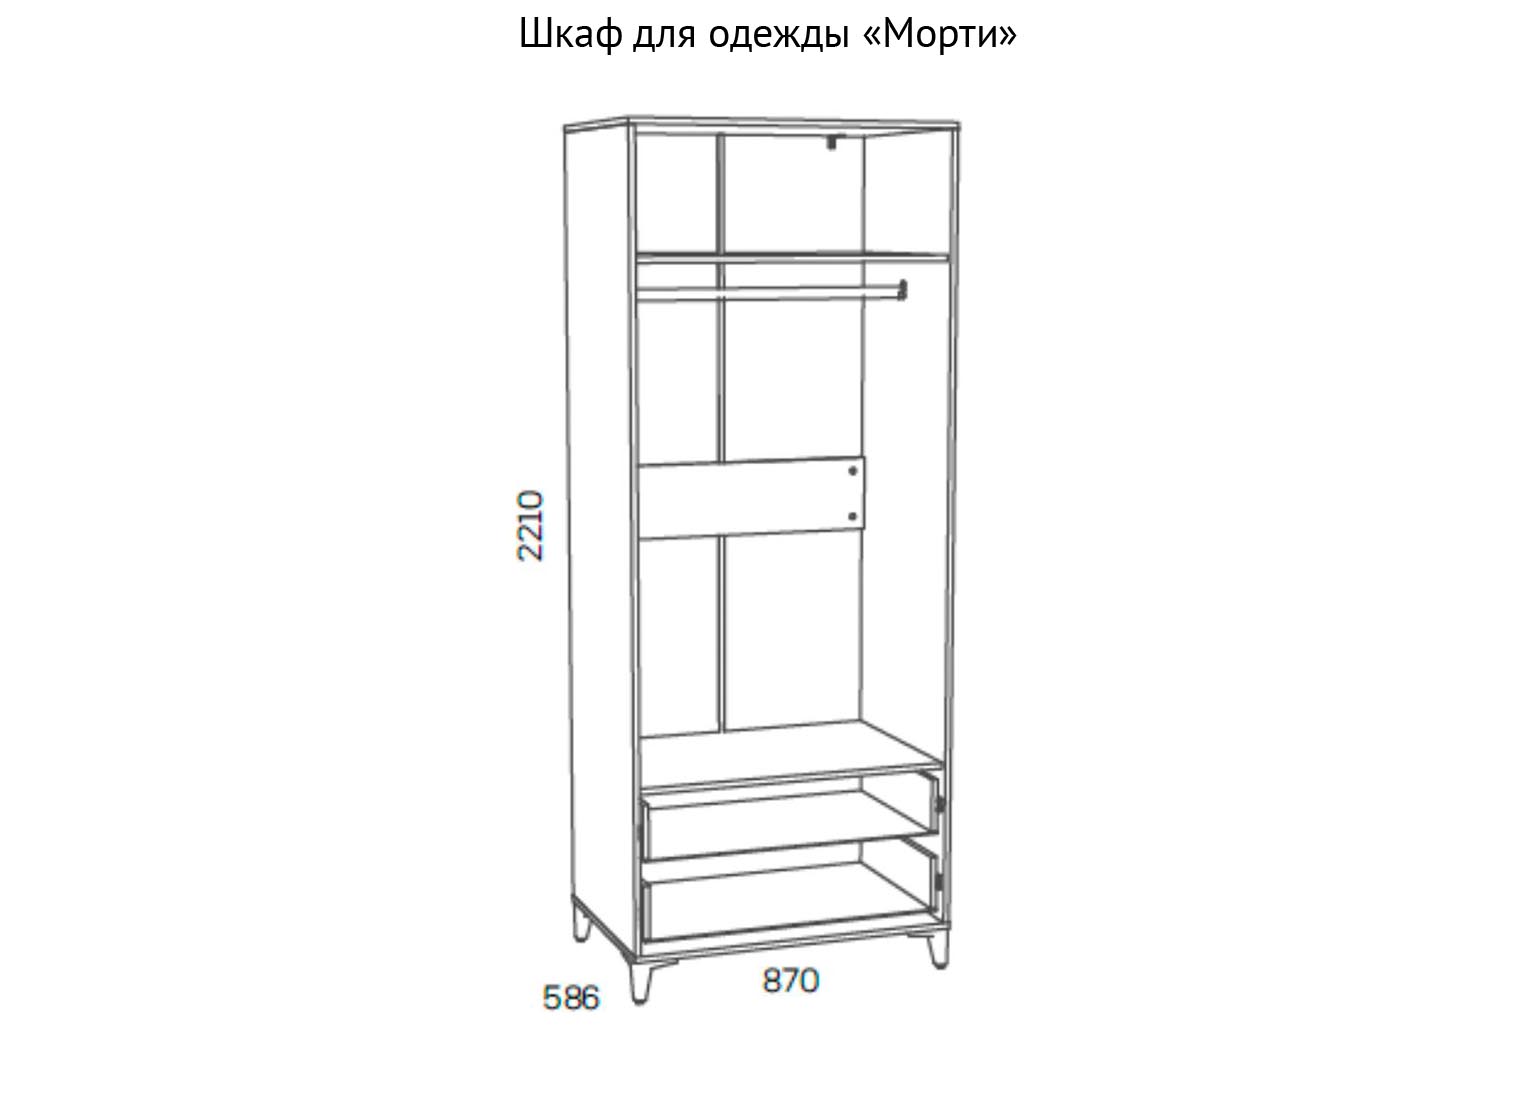 НМ 041.10 Шкаф для одежды Морти схема Мебель Краснодар